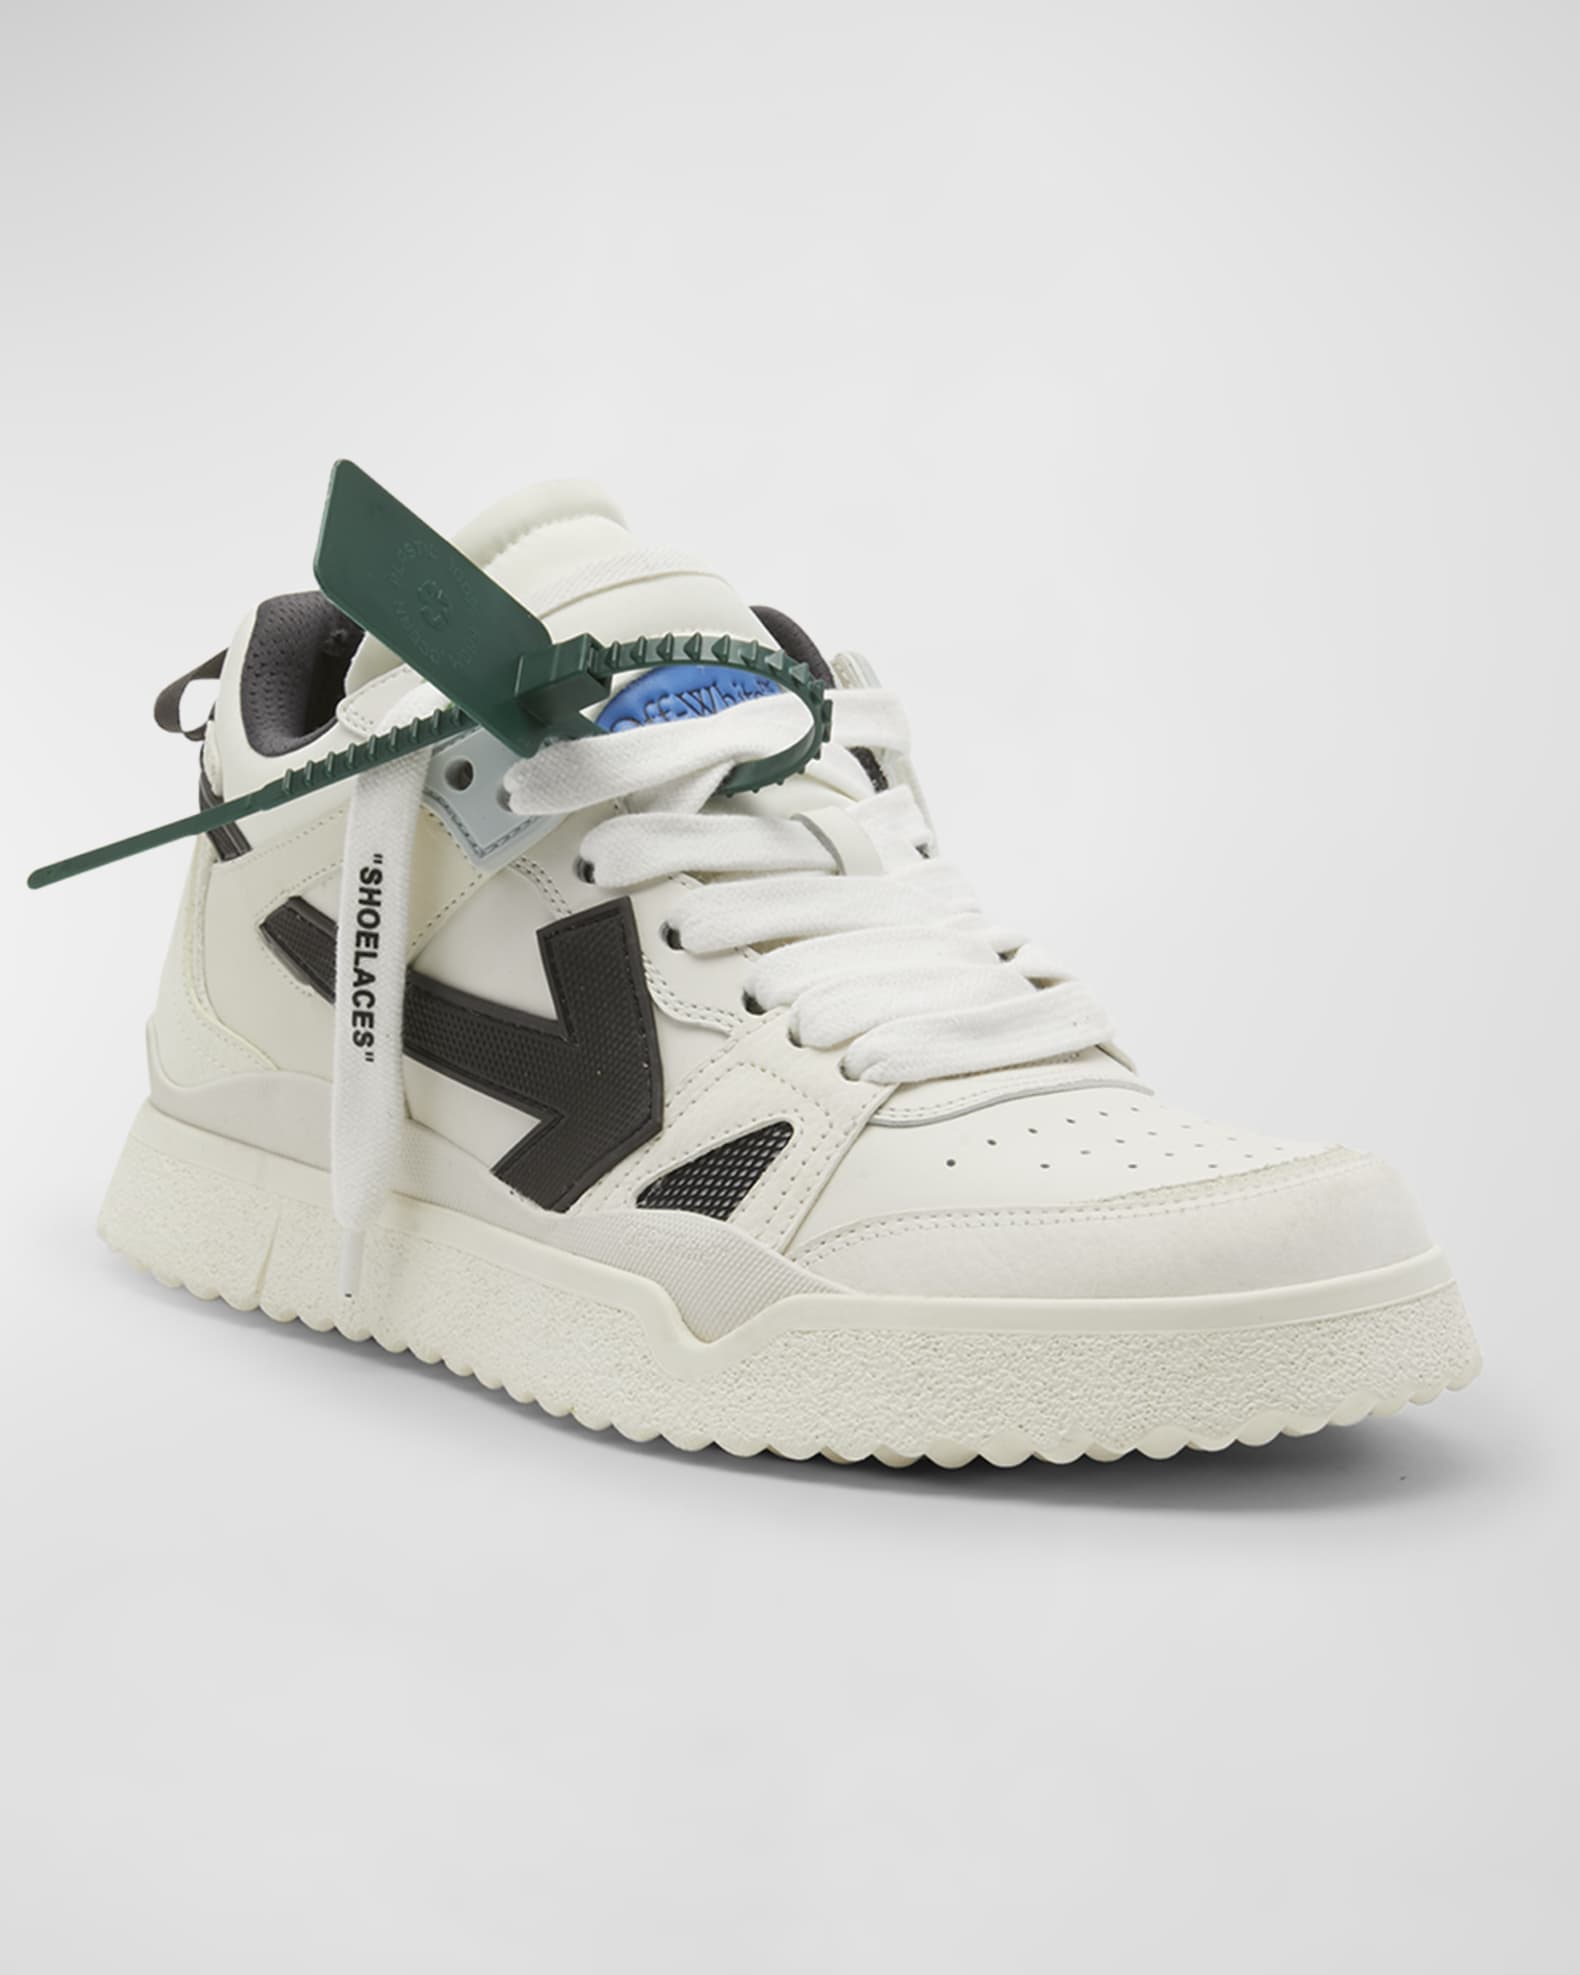 Off-White™ Arrows Mid-Top Sneaker Release